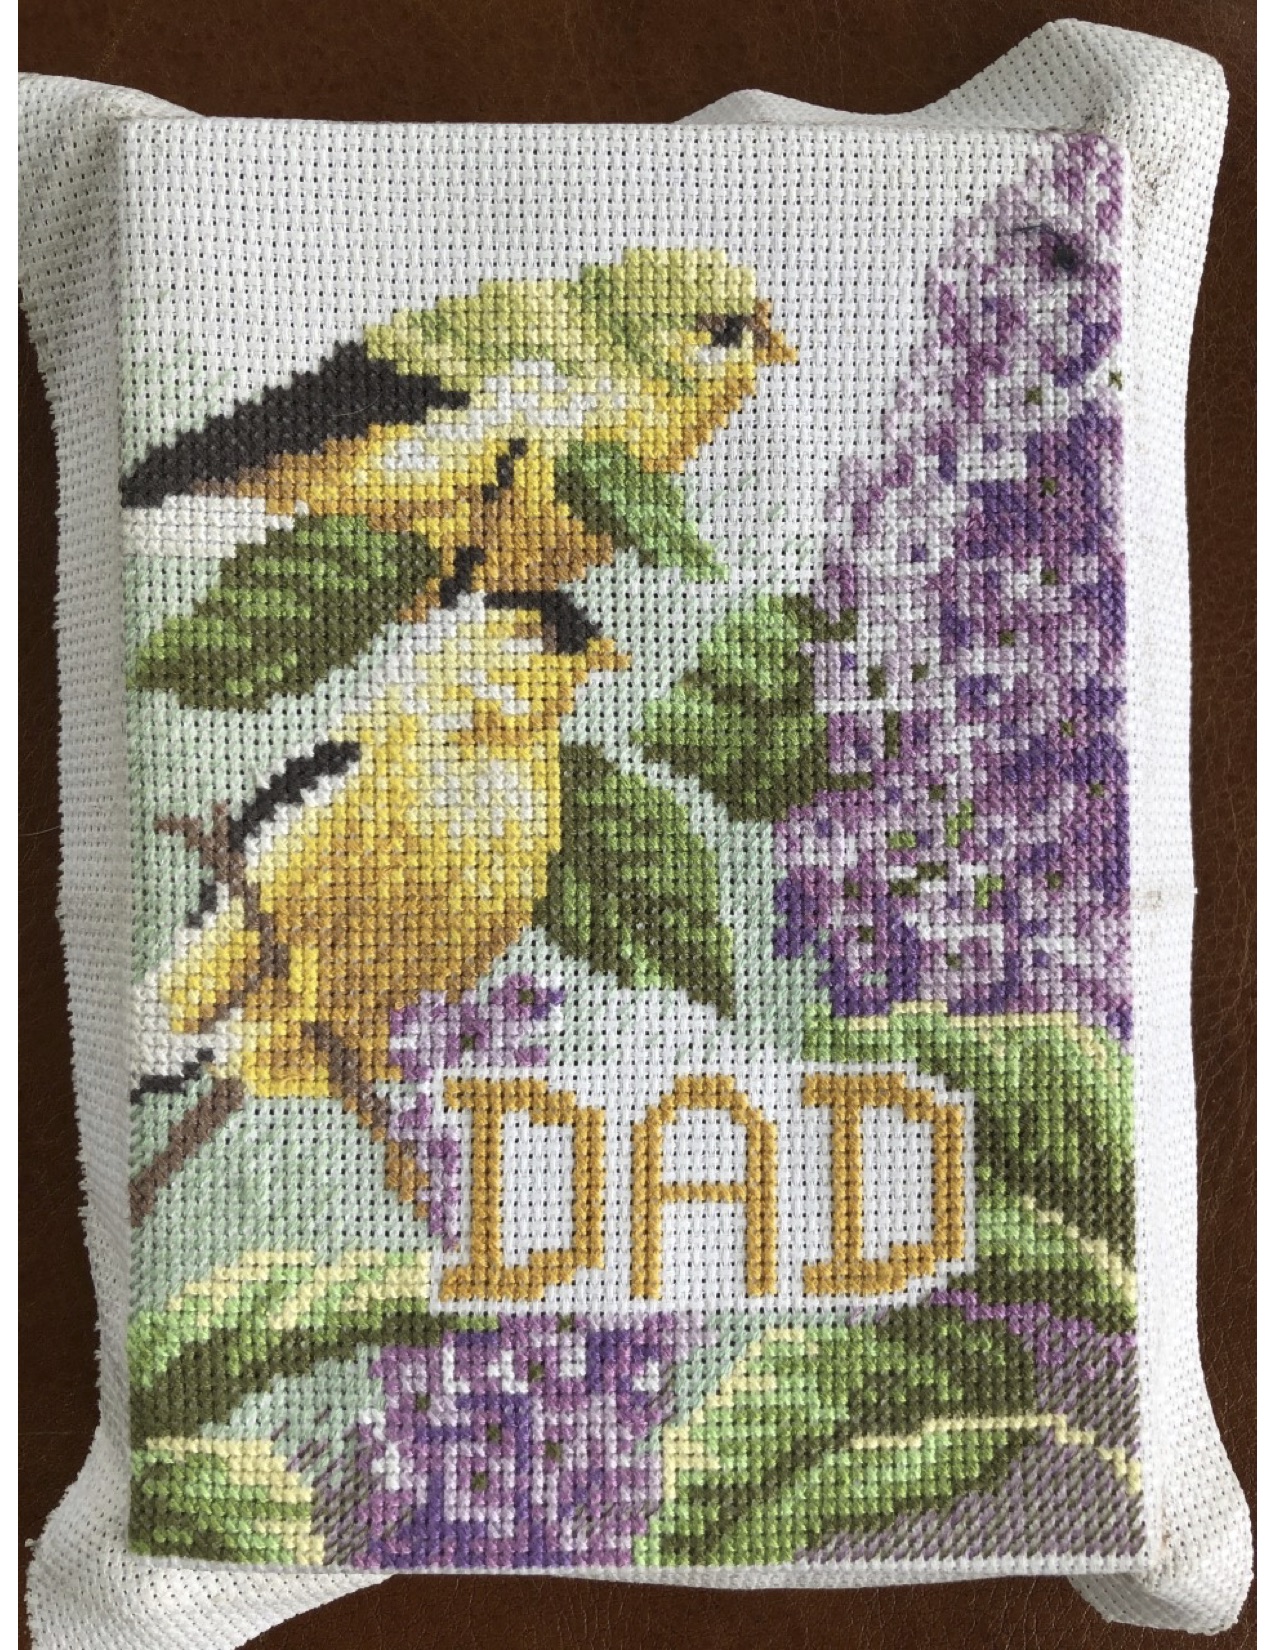 Seneca Ellis's cross-stitch pillow for her dad